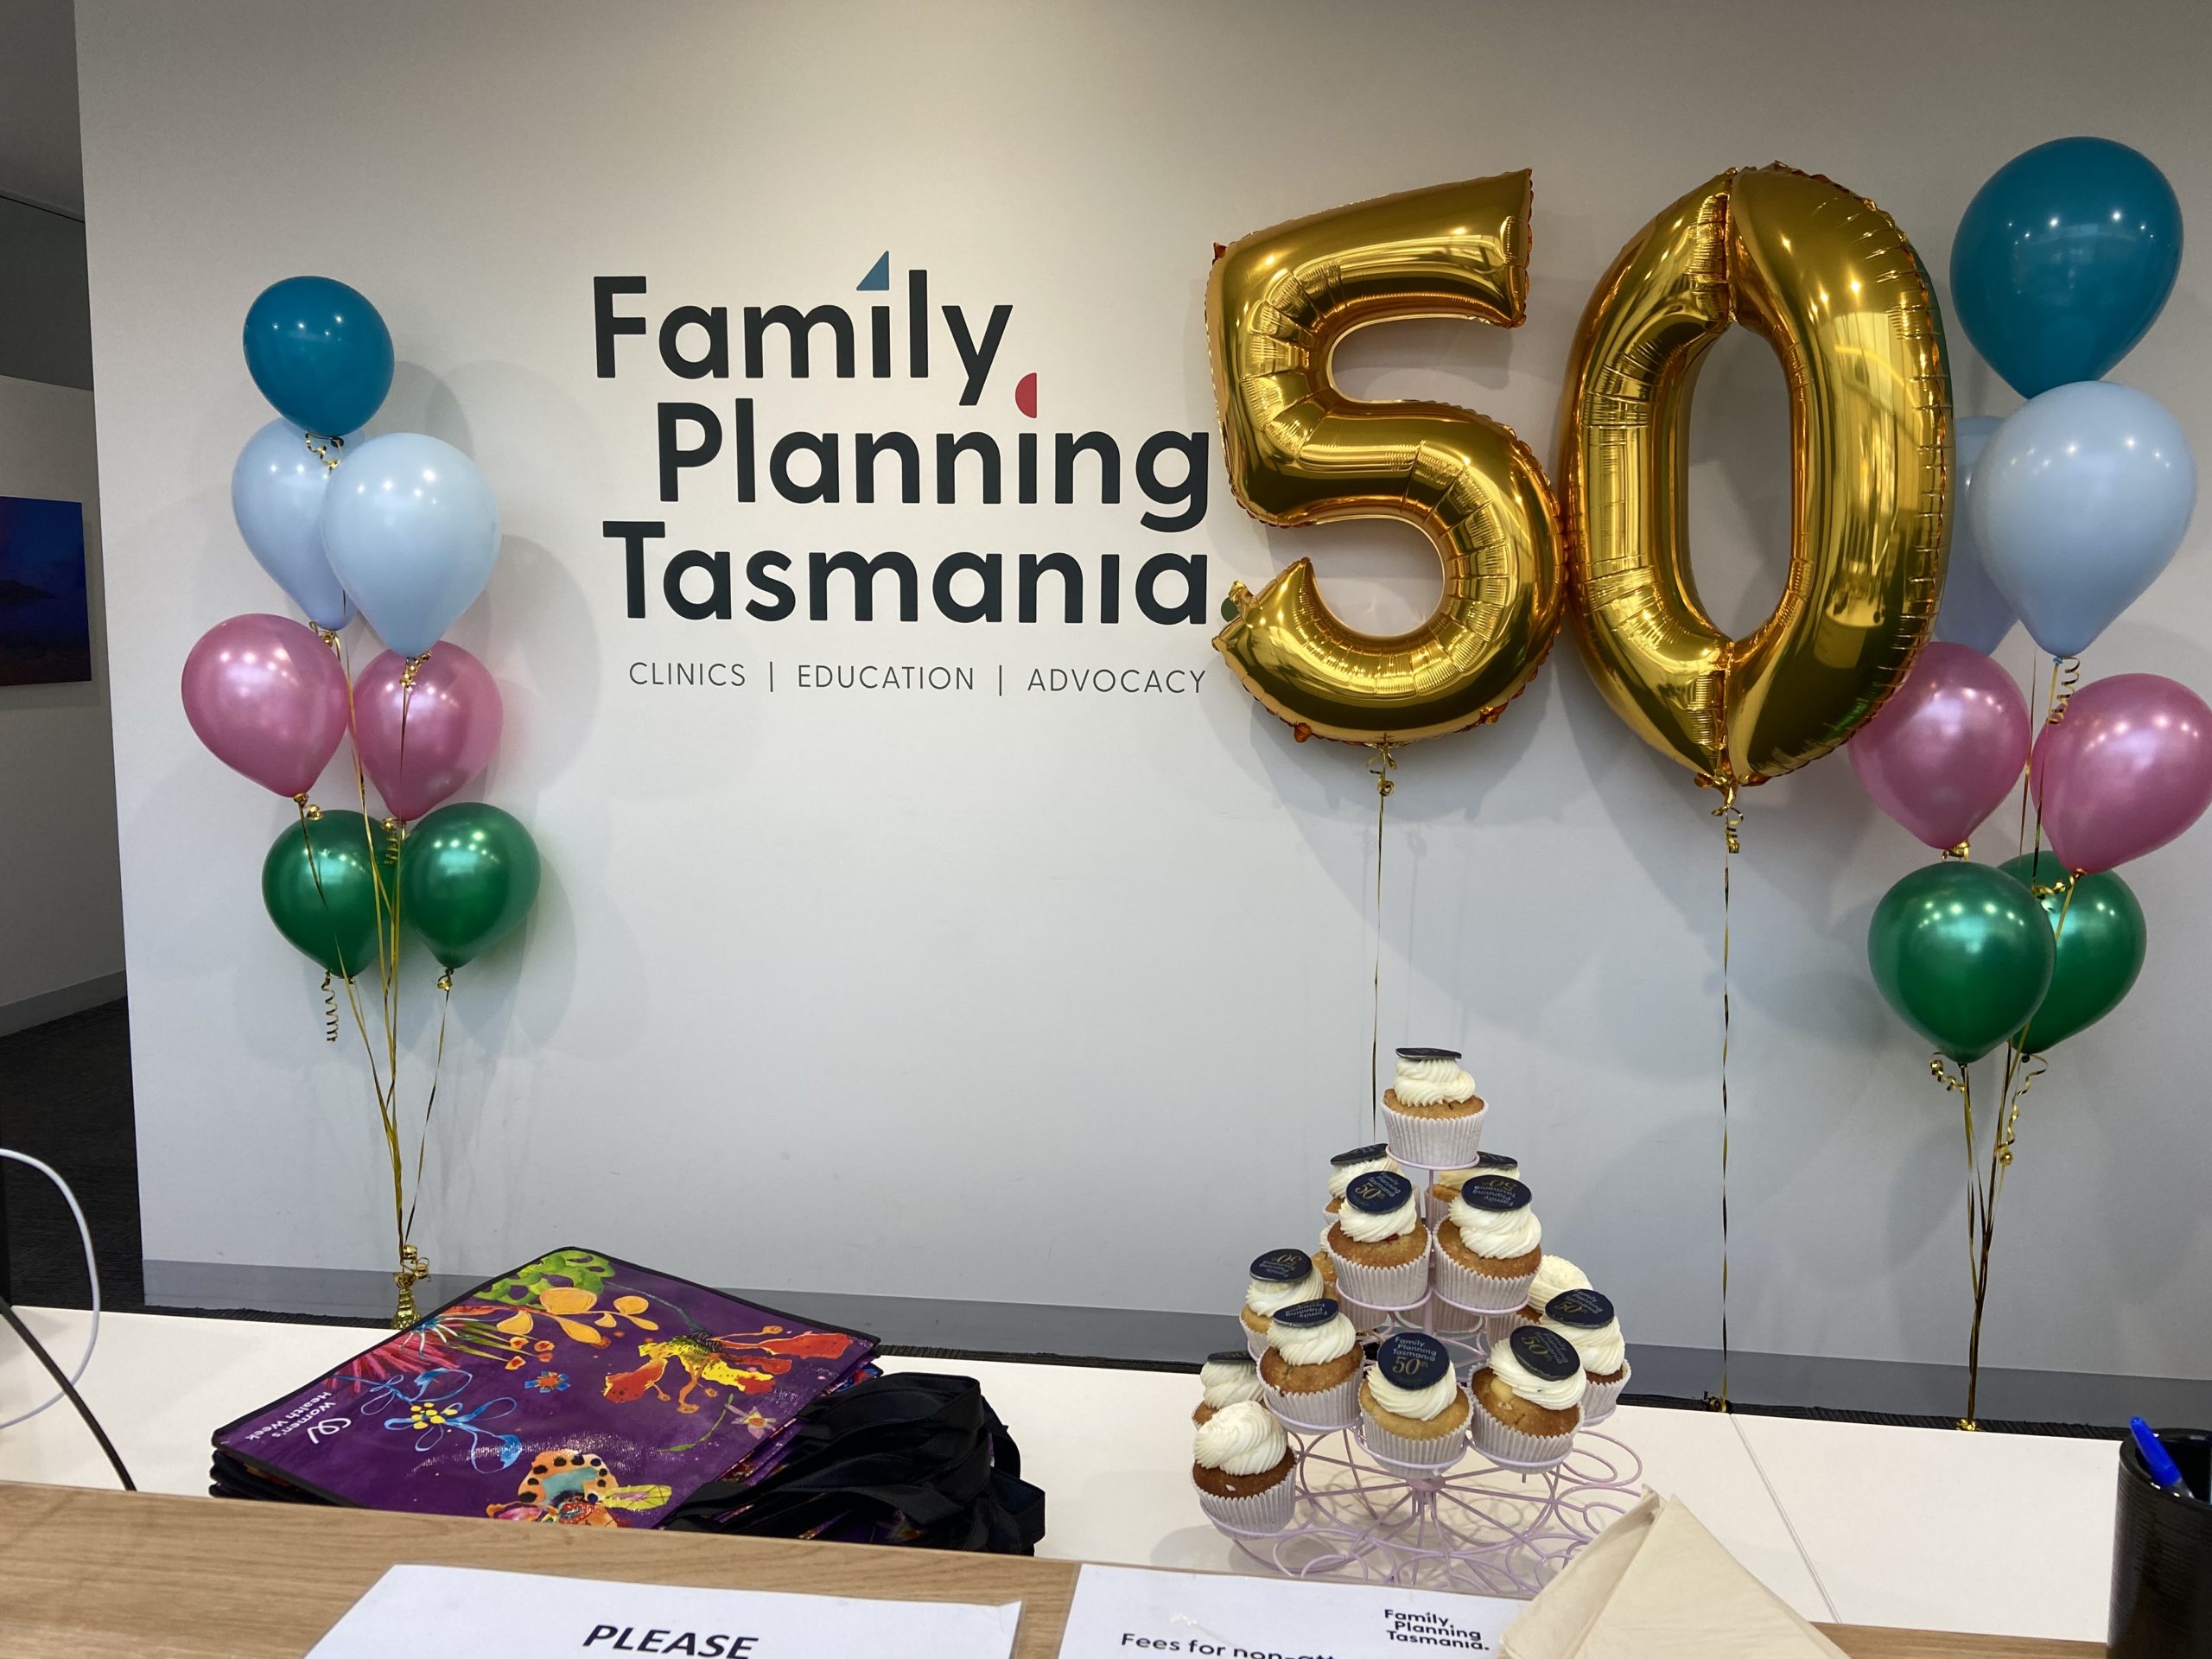 Celebrating 50 years of serving the Tasmanian community